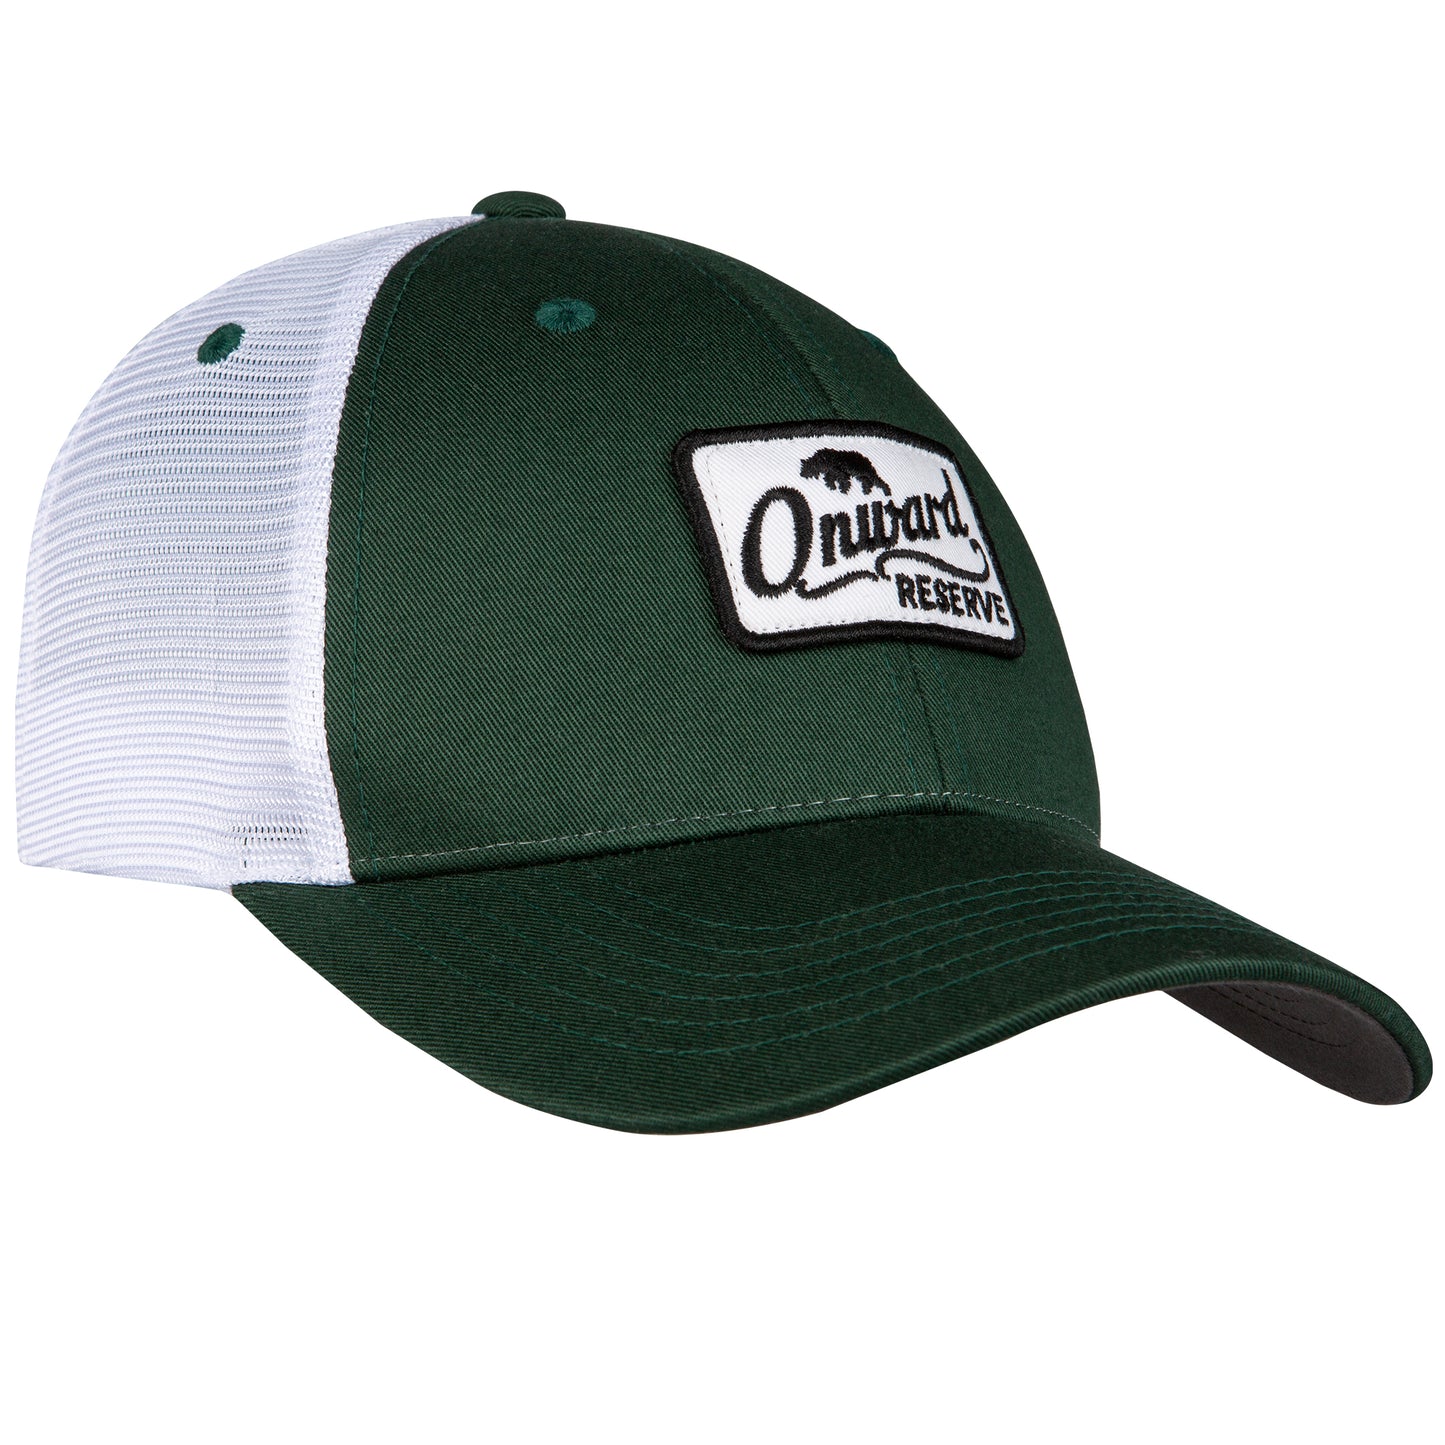 Onward Reserve Patch Trucker Hat